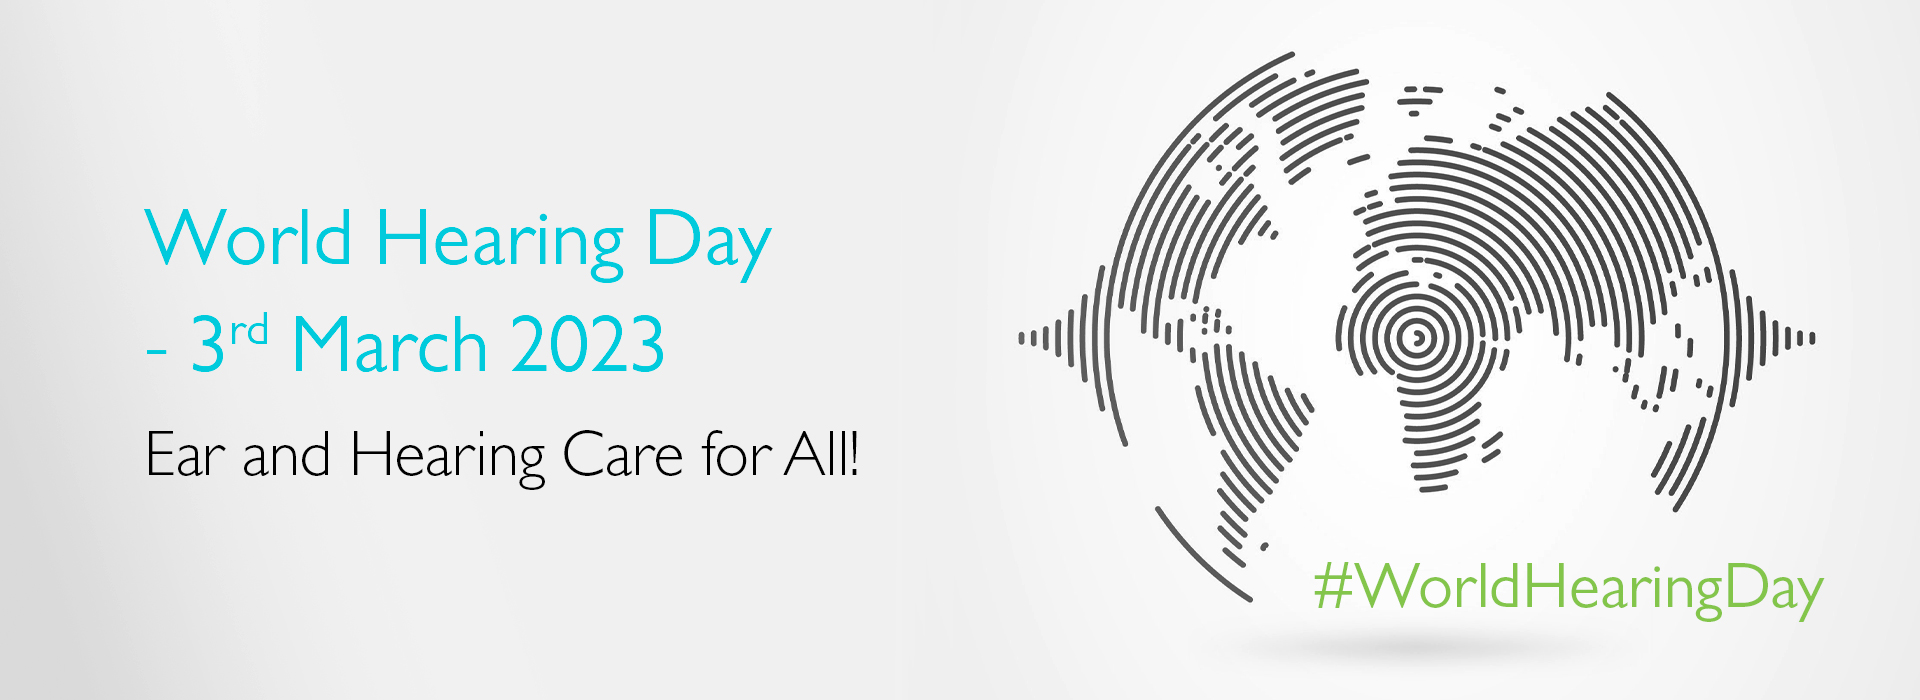 world-hearing-day-2023-intro-banner-1920x700